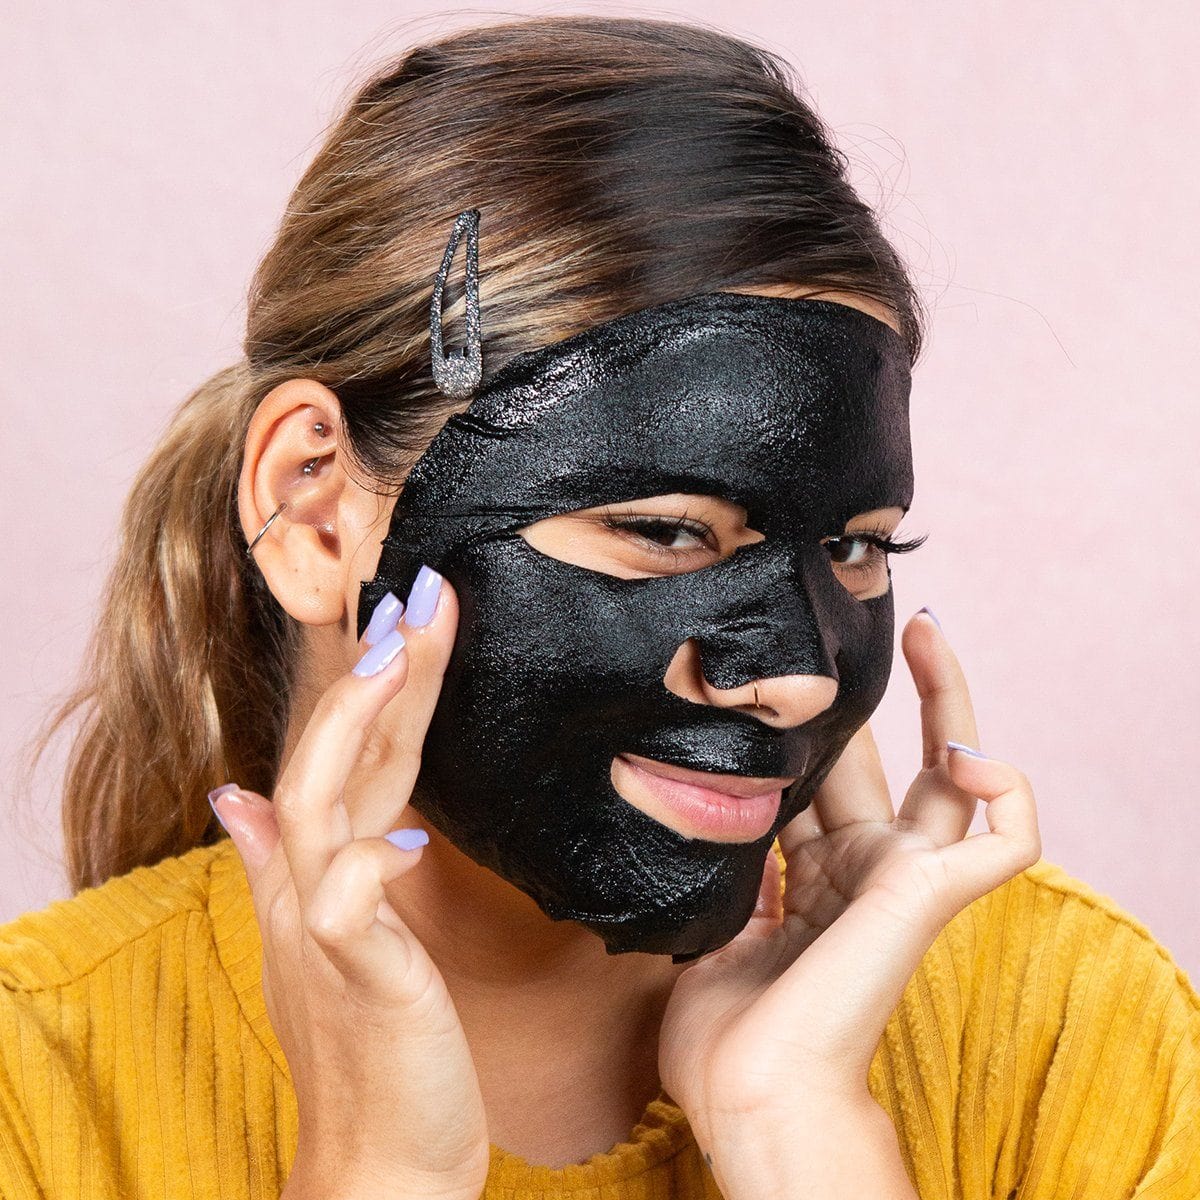 Let's Talk Detox Purifying Pore Mask w/Charcoal - nomadgirlbeauty